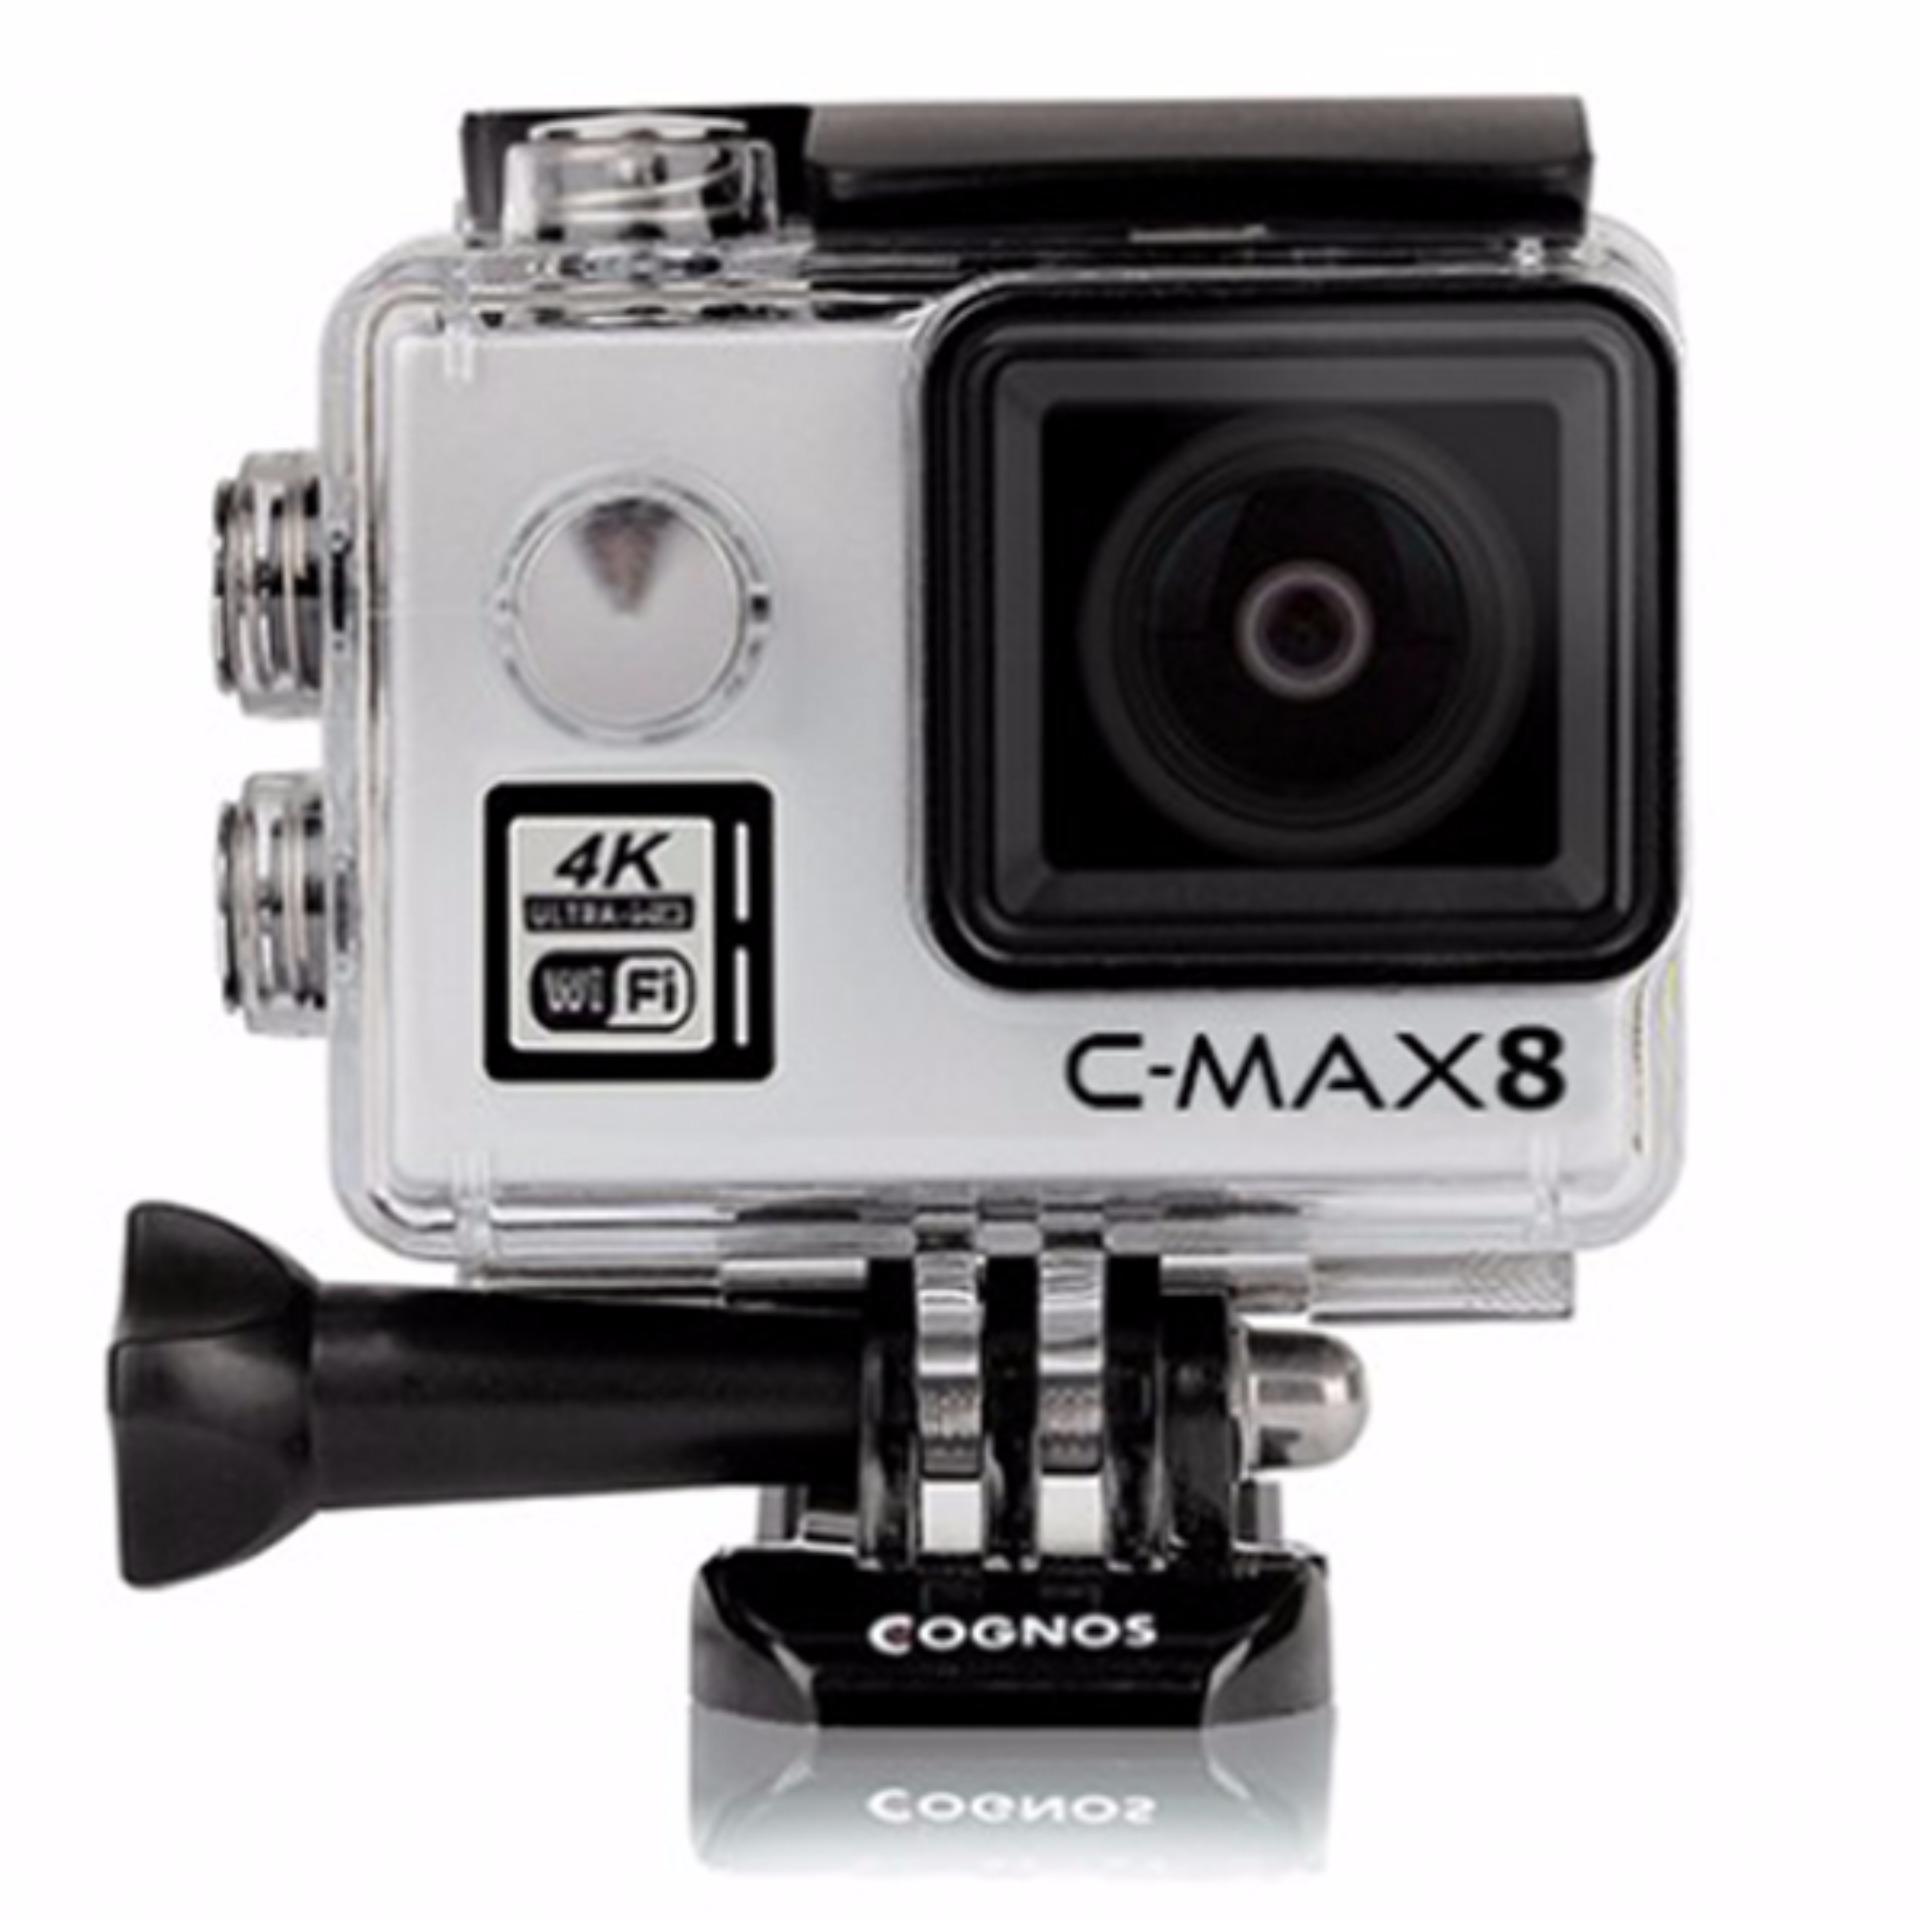 Cognos Omega 4K C-MAX 8 Action Camera 16 MP - MIKA BOX - Silver